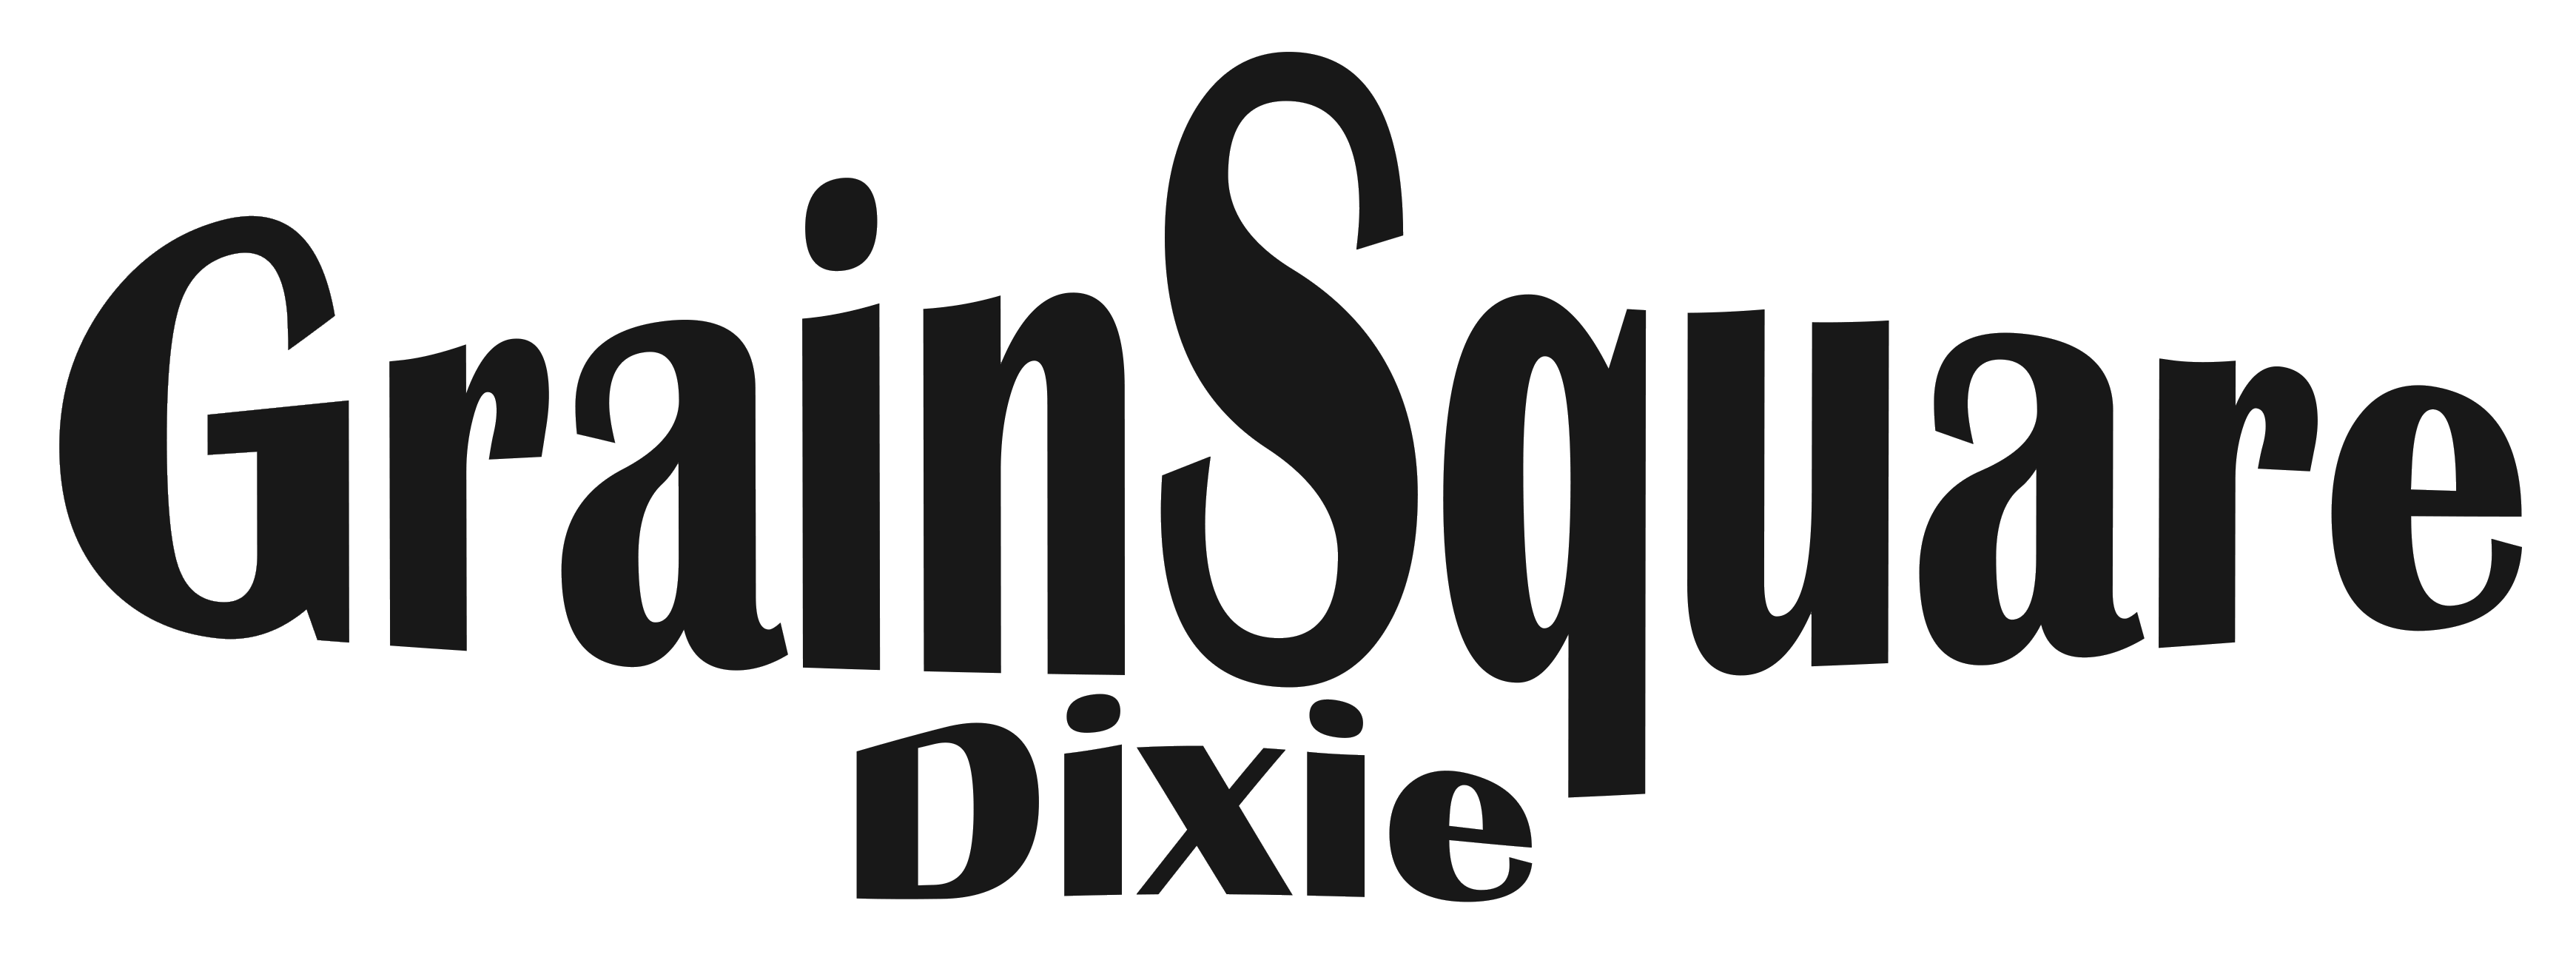 Grain Square Dixie